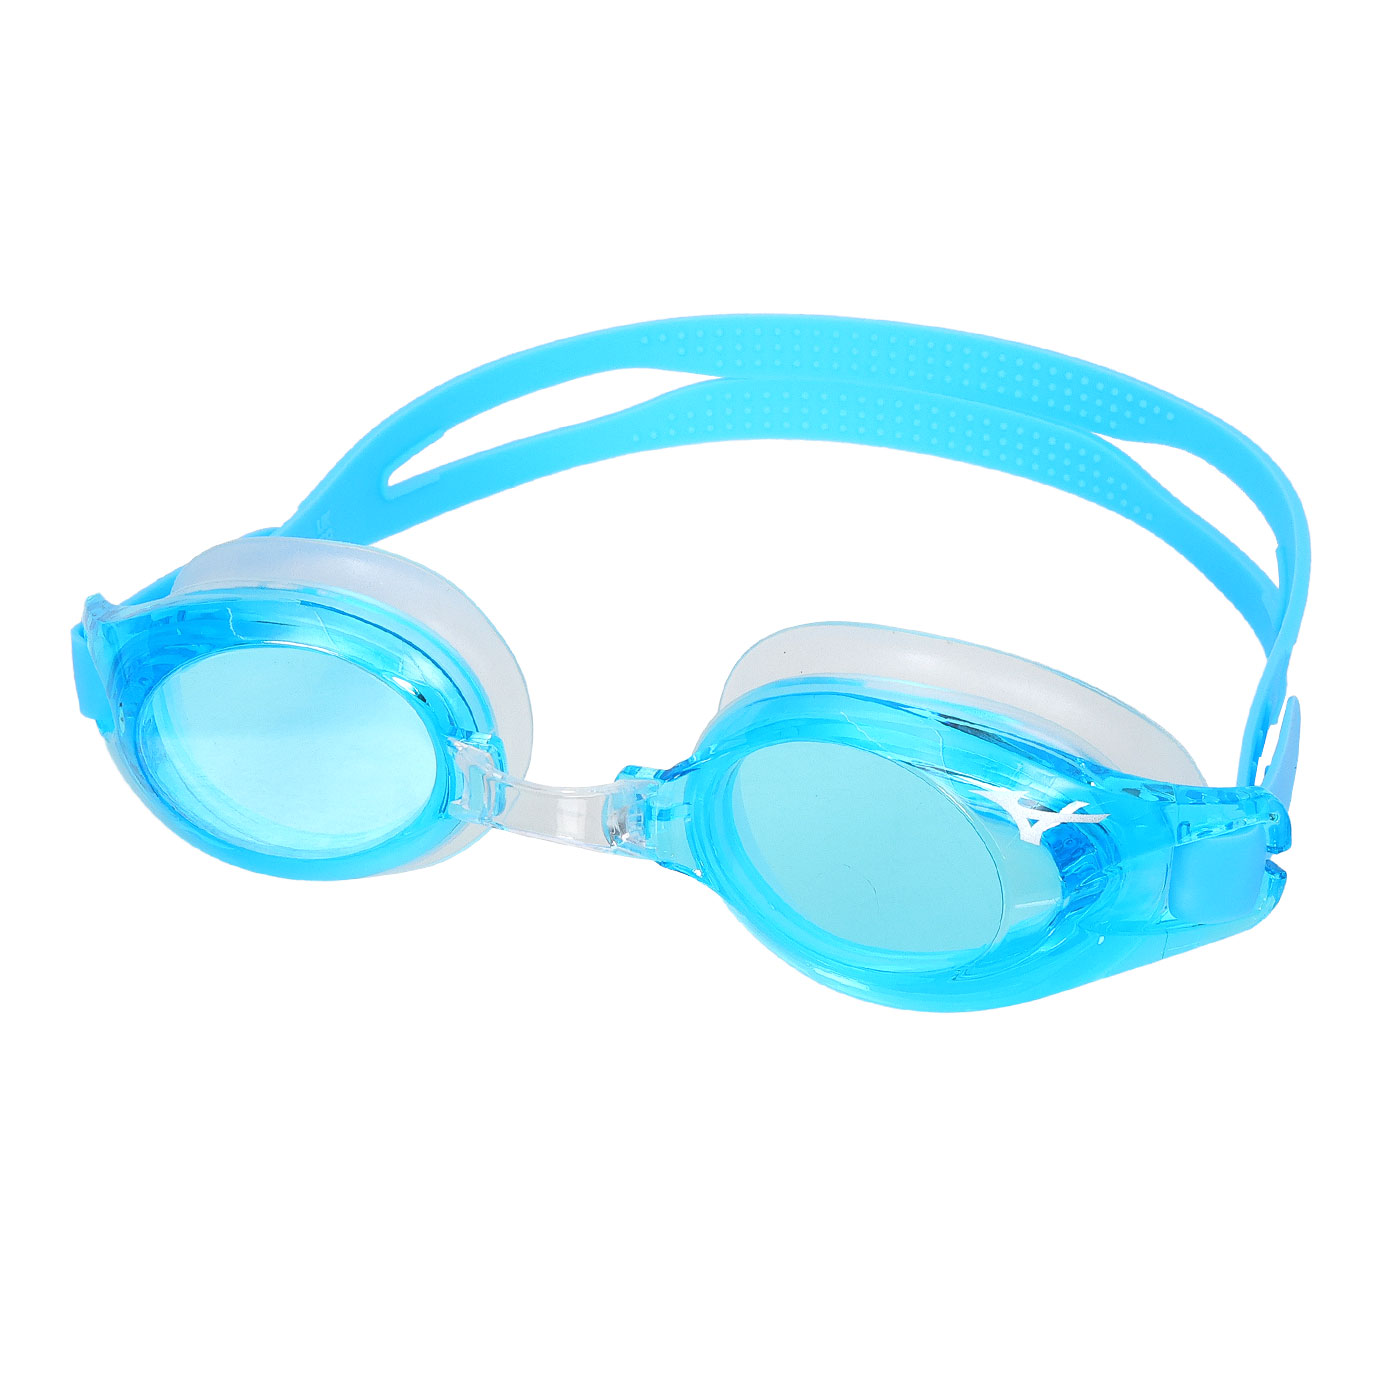 MIZUNO 泳鏡  SWIM N3TEB72000-19 - 水藍銀